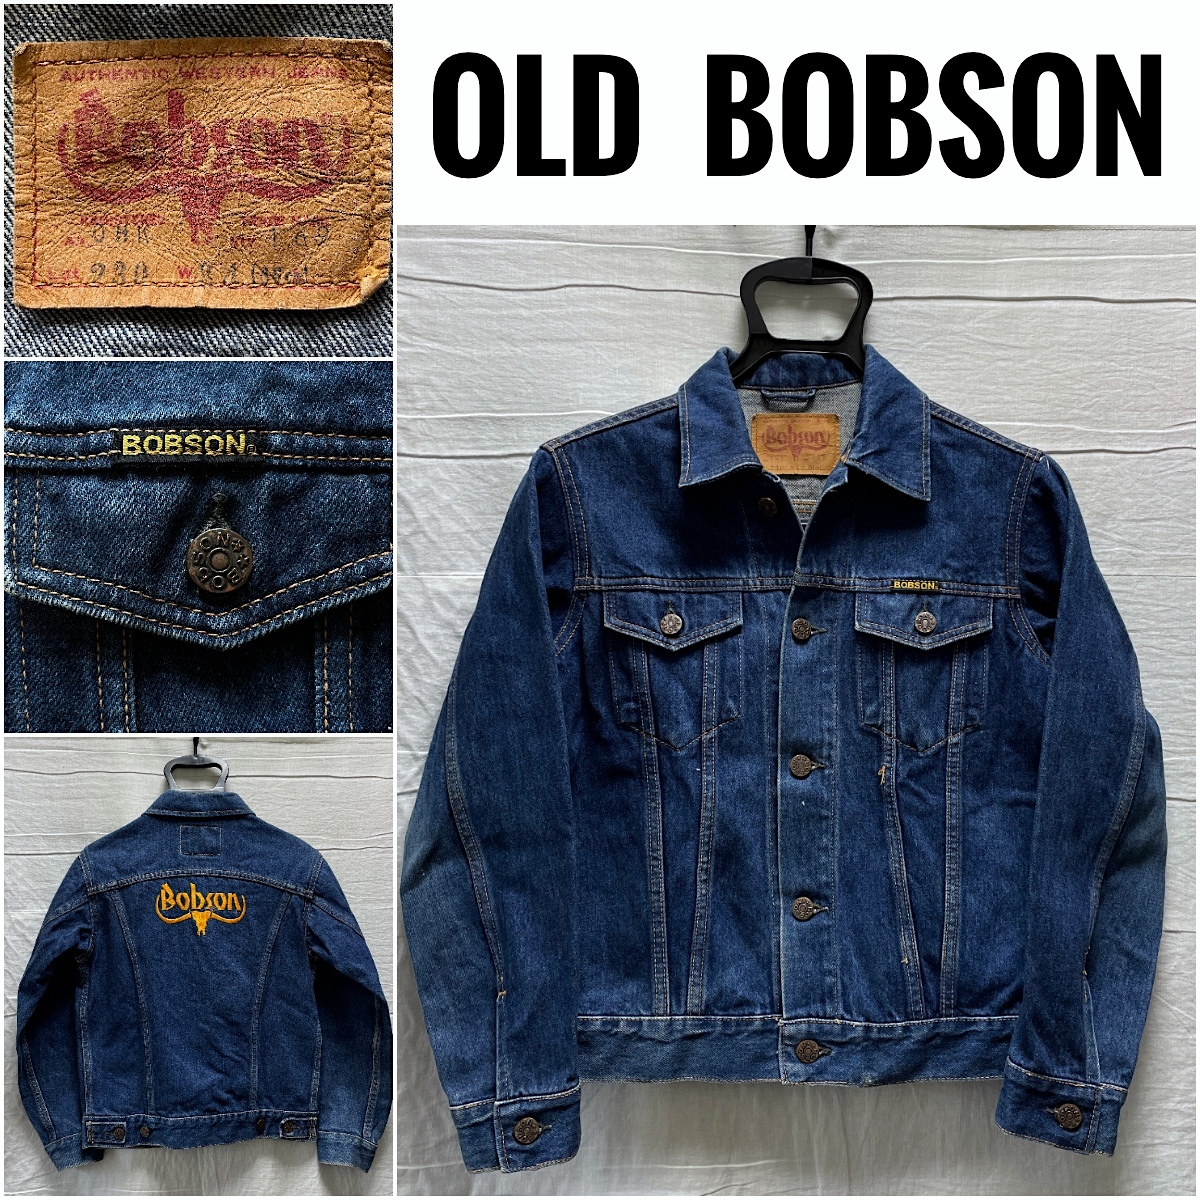 OLD BOBSON Denim Jacket made in Japan Vintage Bobson Denim jacket 34 Lot 230 back . with logo embroidery domestic production Vintage Showa era 